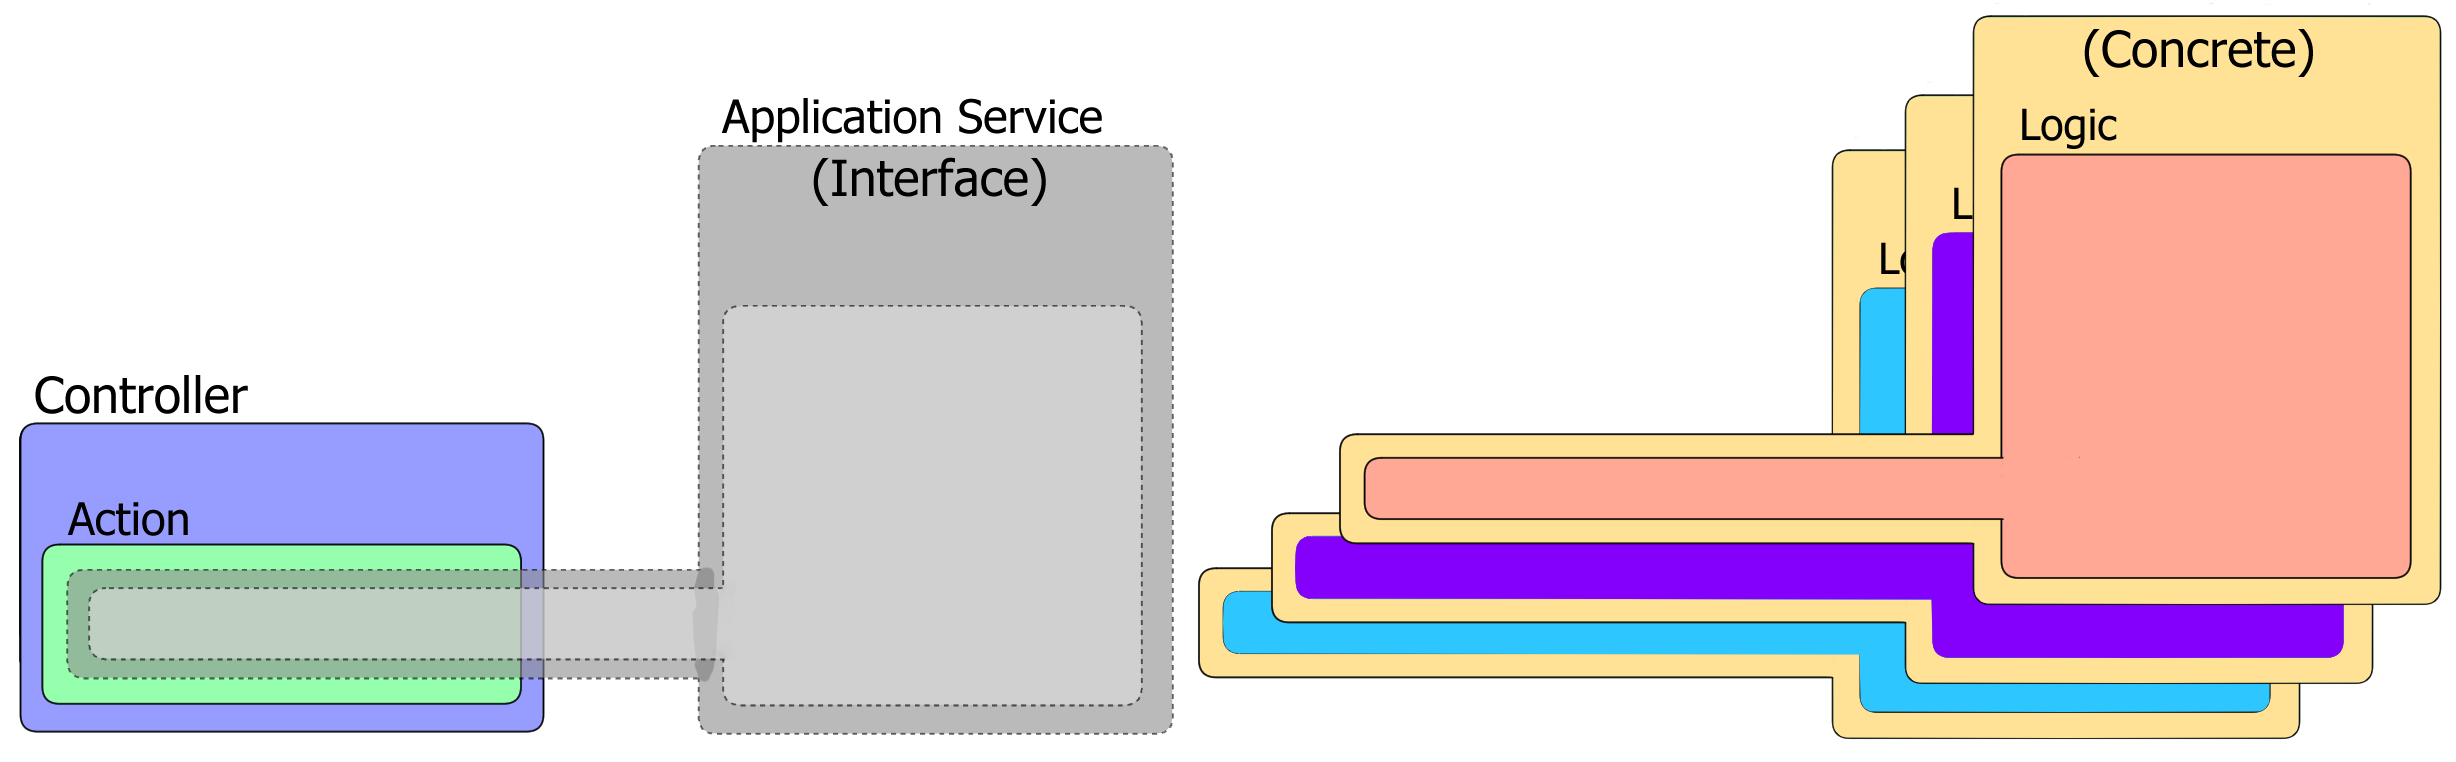 An application service interface